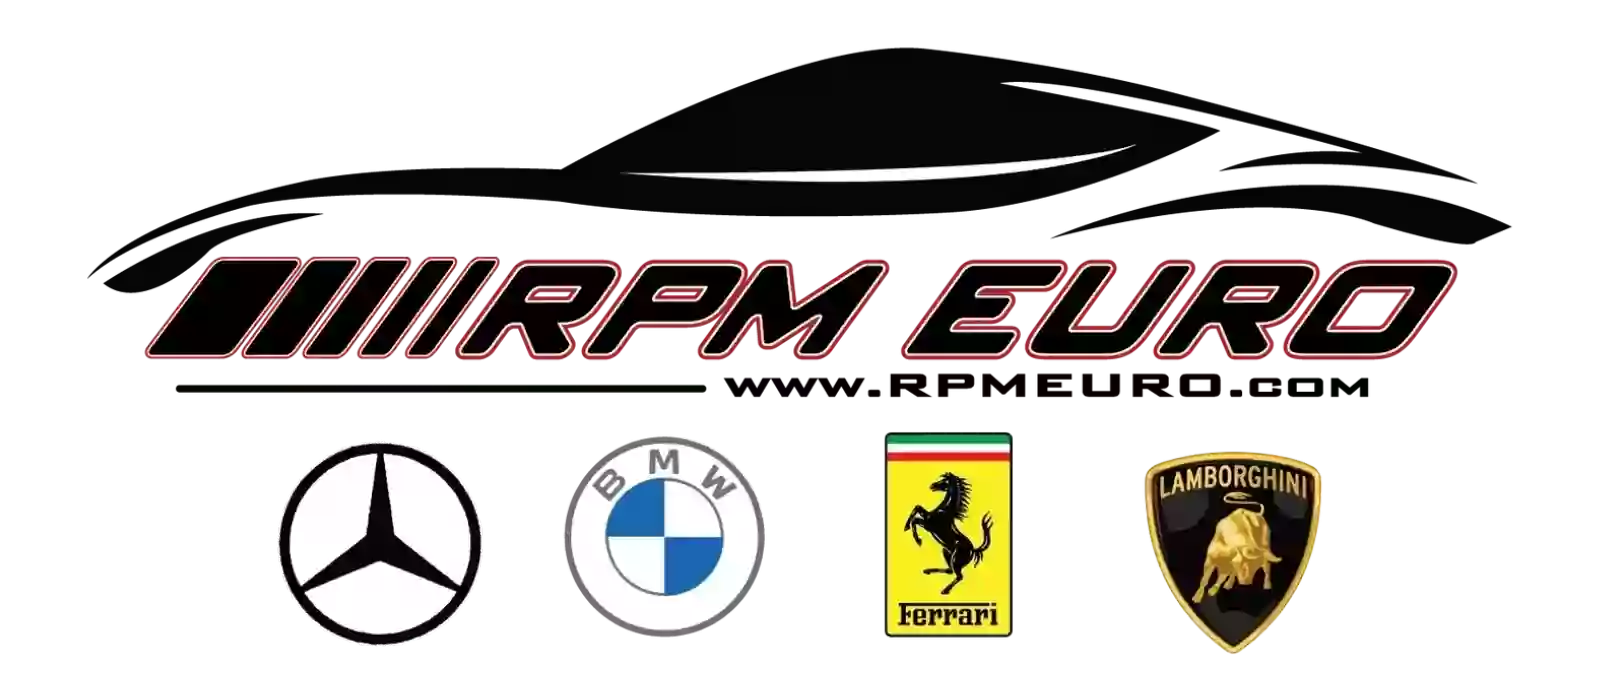 RPM Euro, LLC